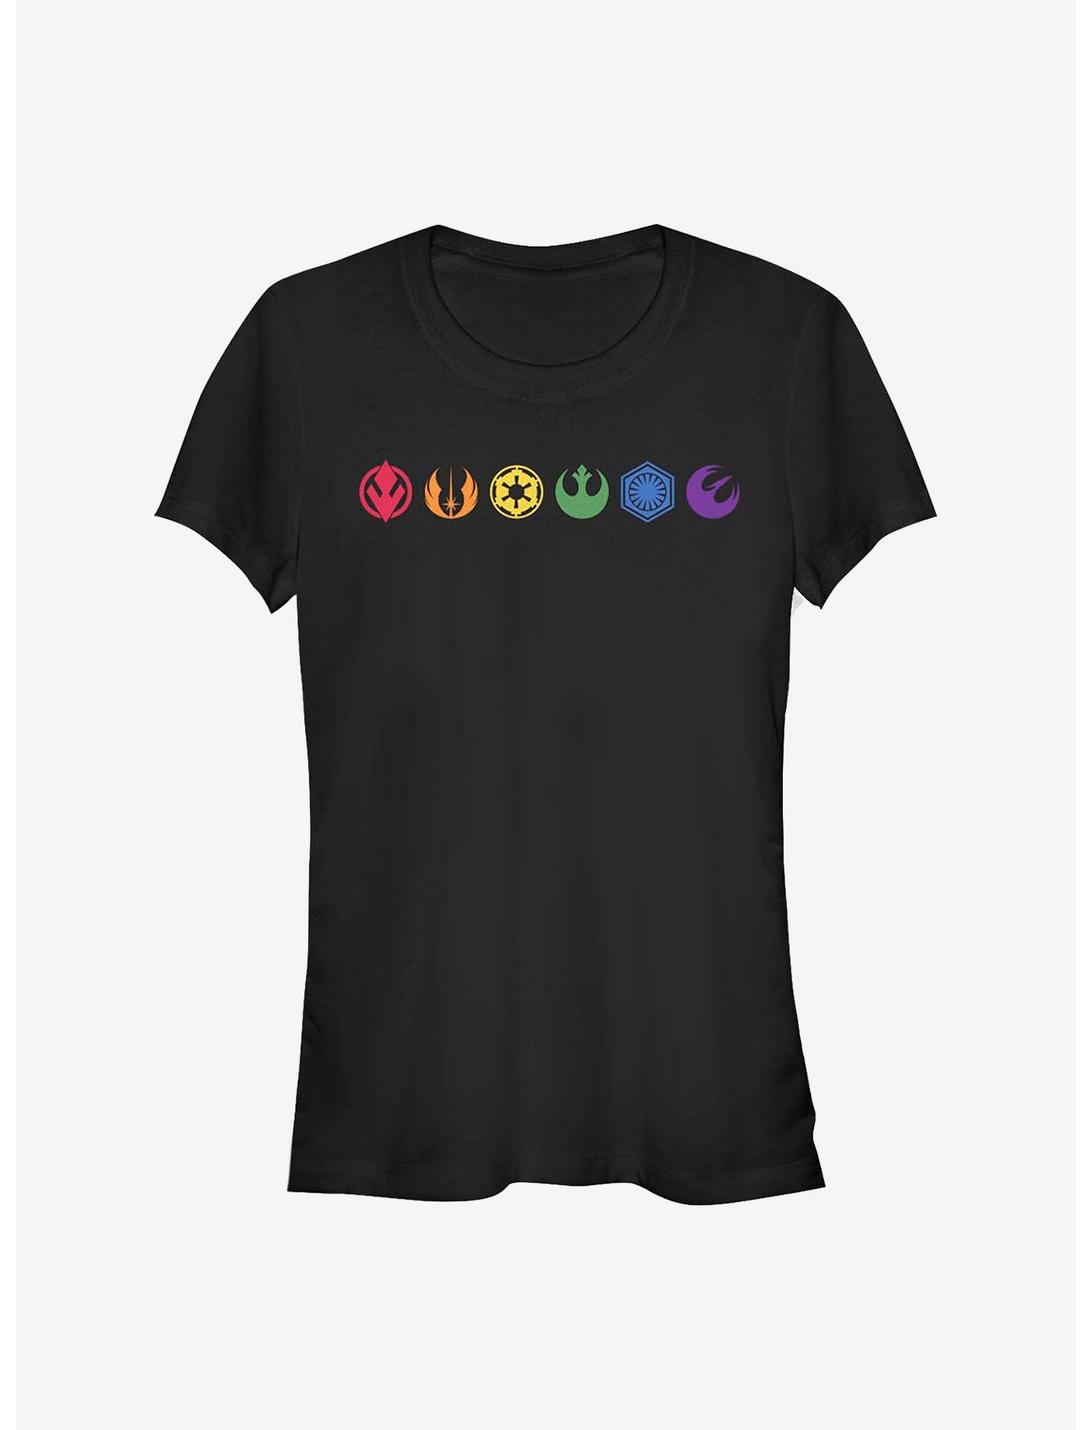 Star Wars Rainbow Icons T-Shirt, BLACK, hi-res